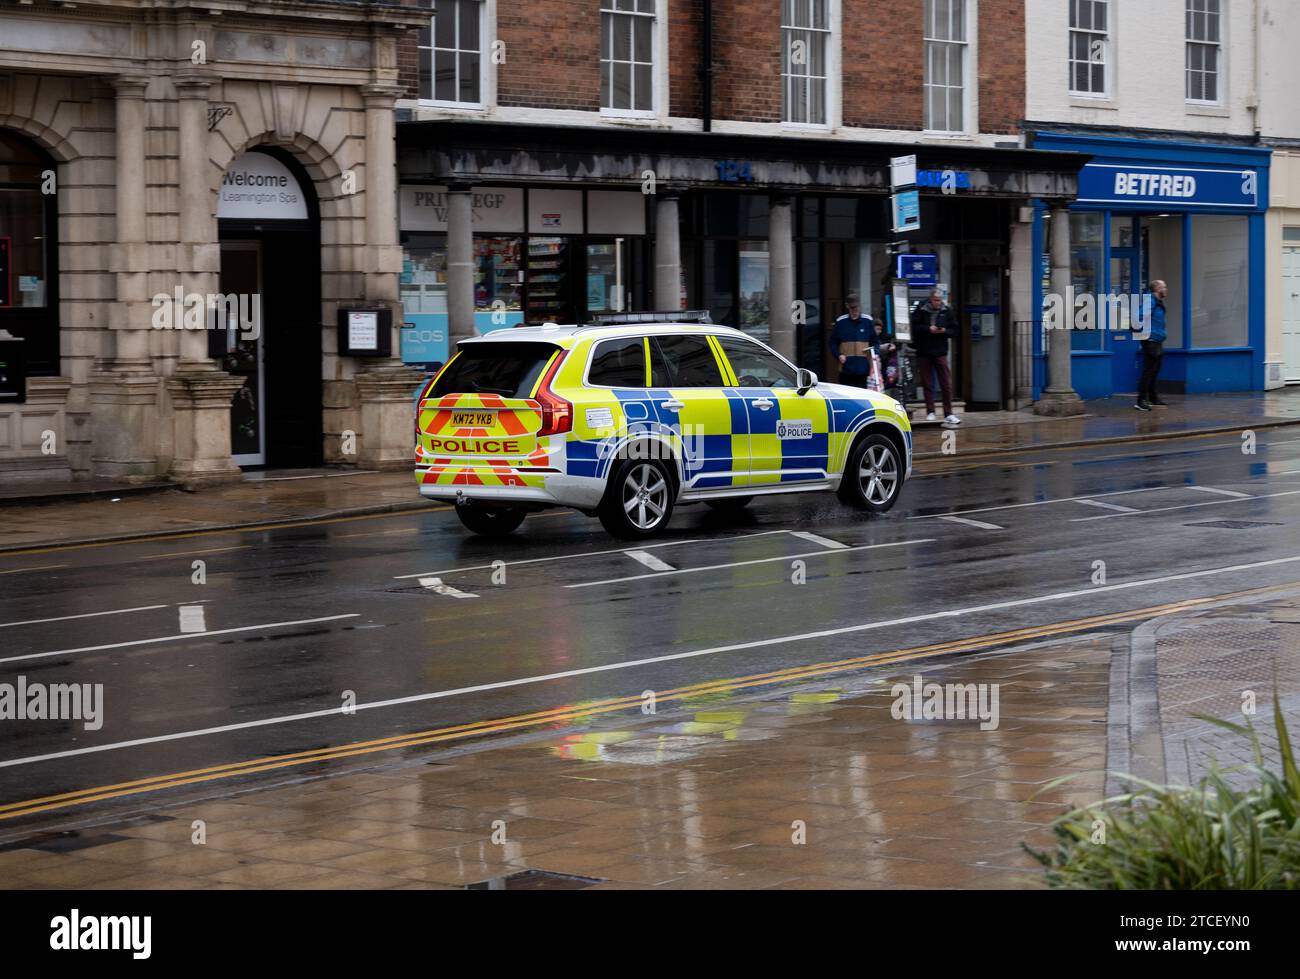 Warwickshire Police car in wet weather, The Parade, Warwickshire, UK Stock Photo